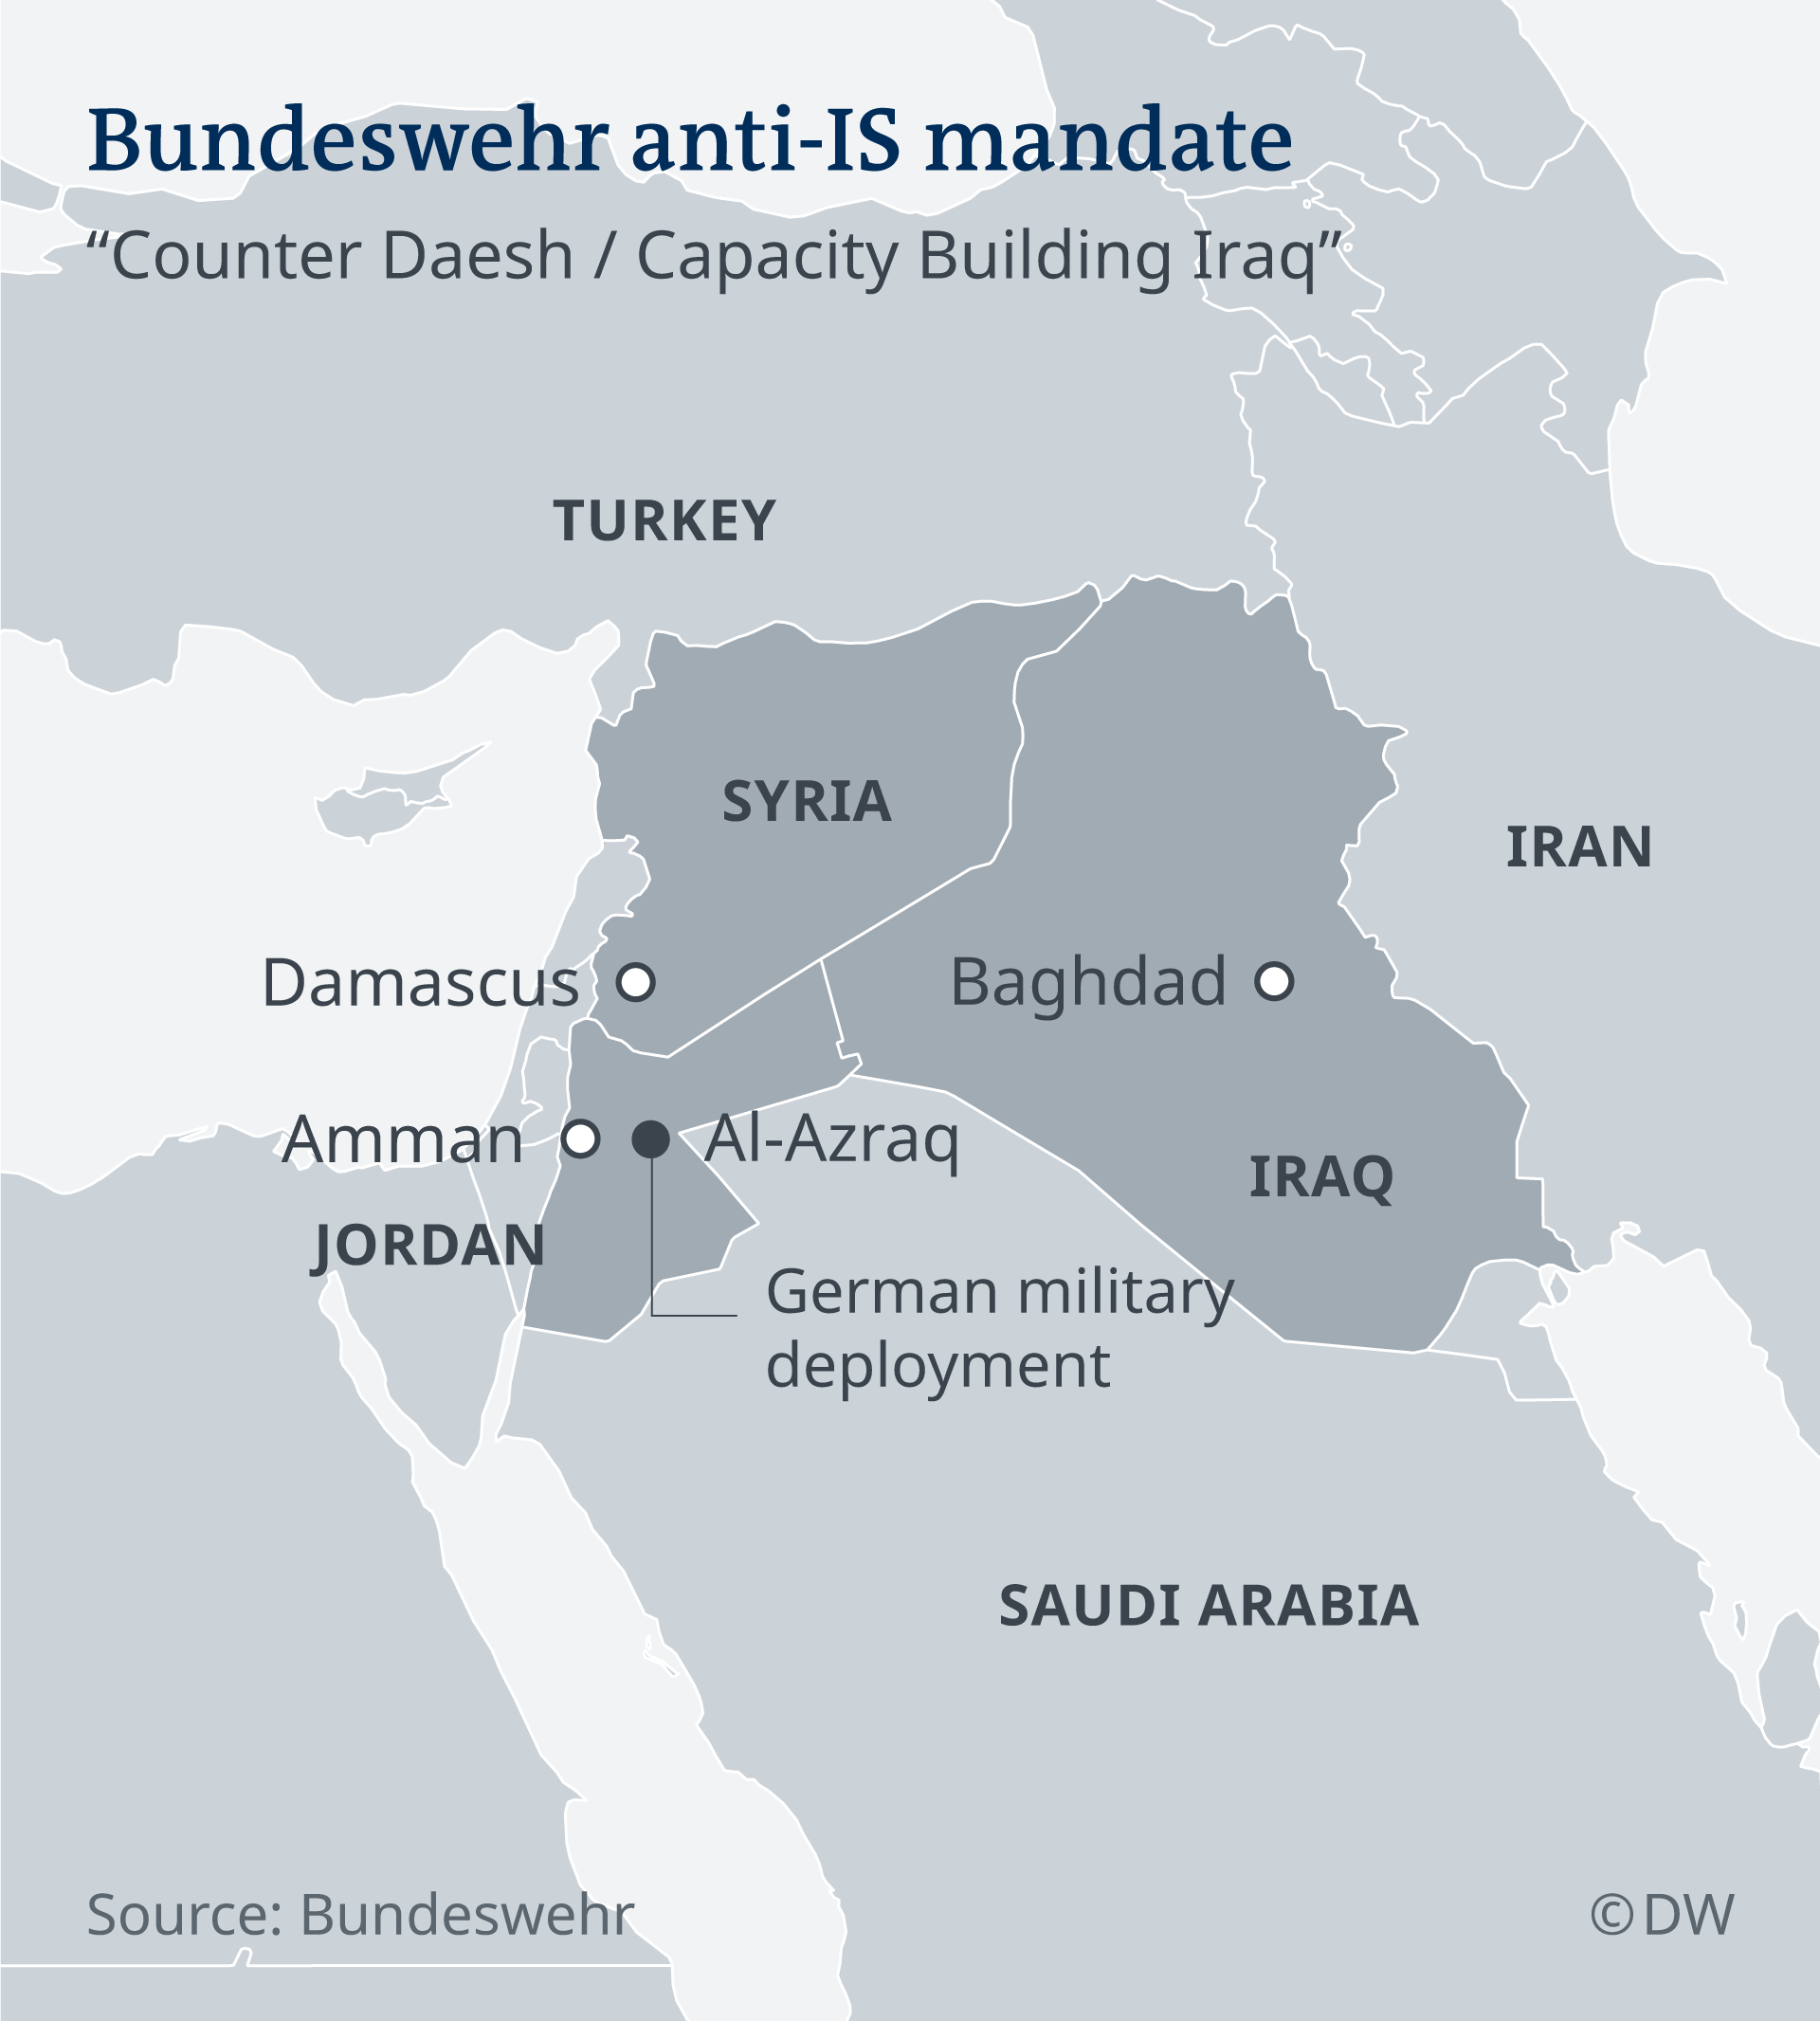 Bundeswehr anti-IS mandate (source: DW)